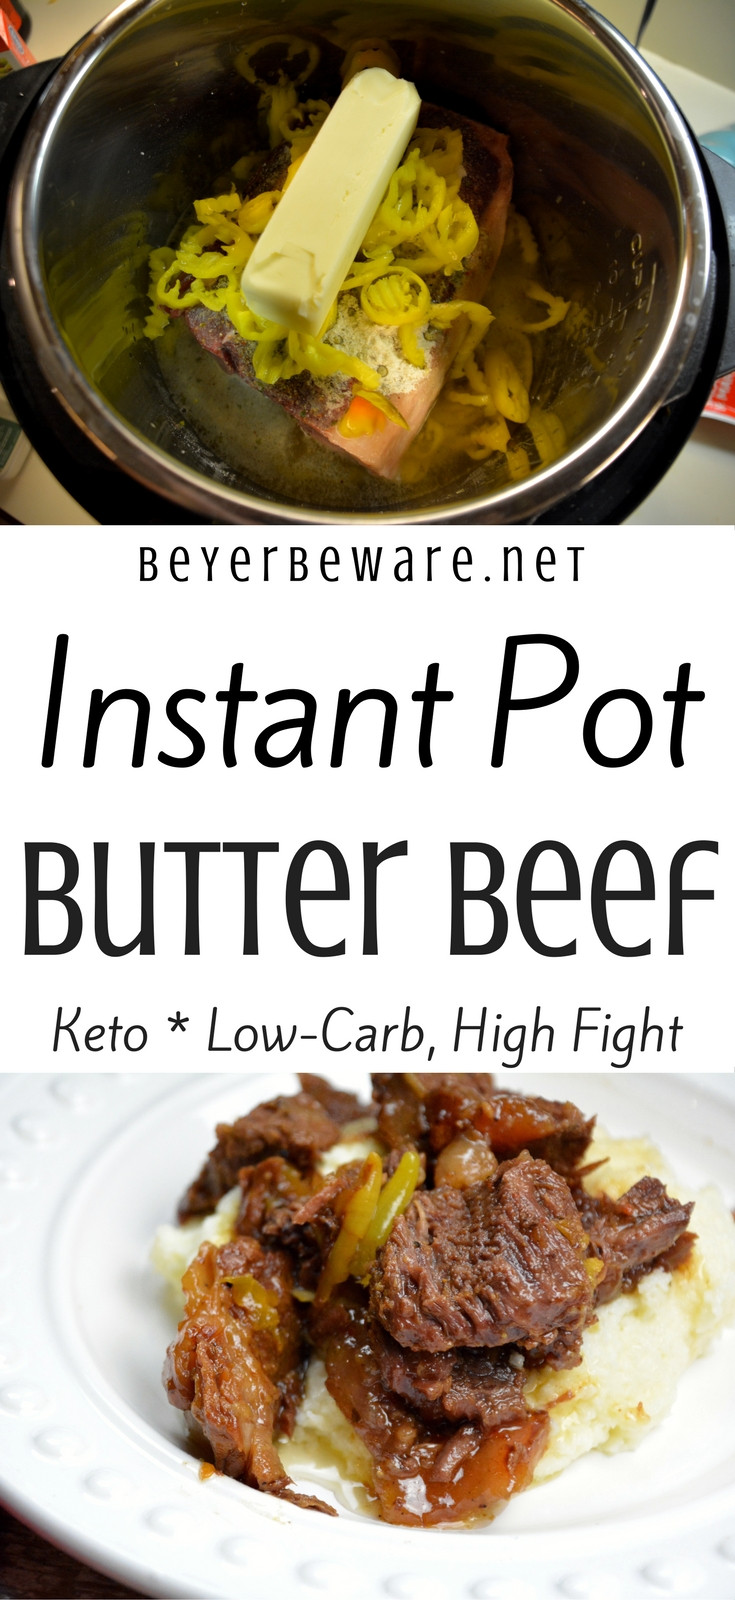 Keto Diet Instant Pot
 Instant Pot Butter Beef Keto Low Carb Recipe Beyer Beware